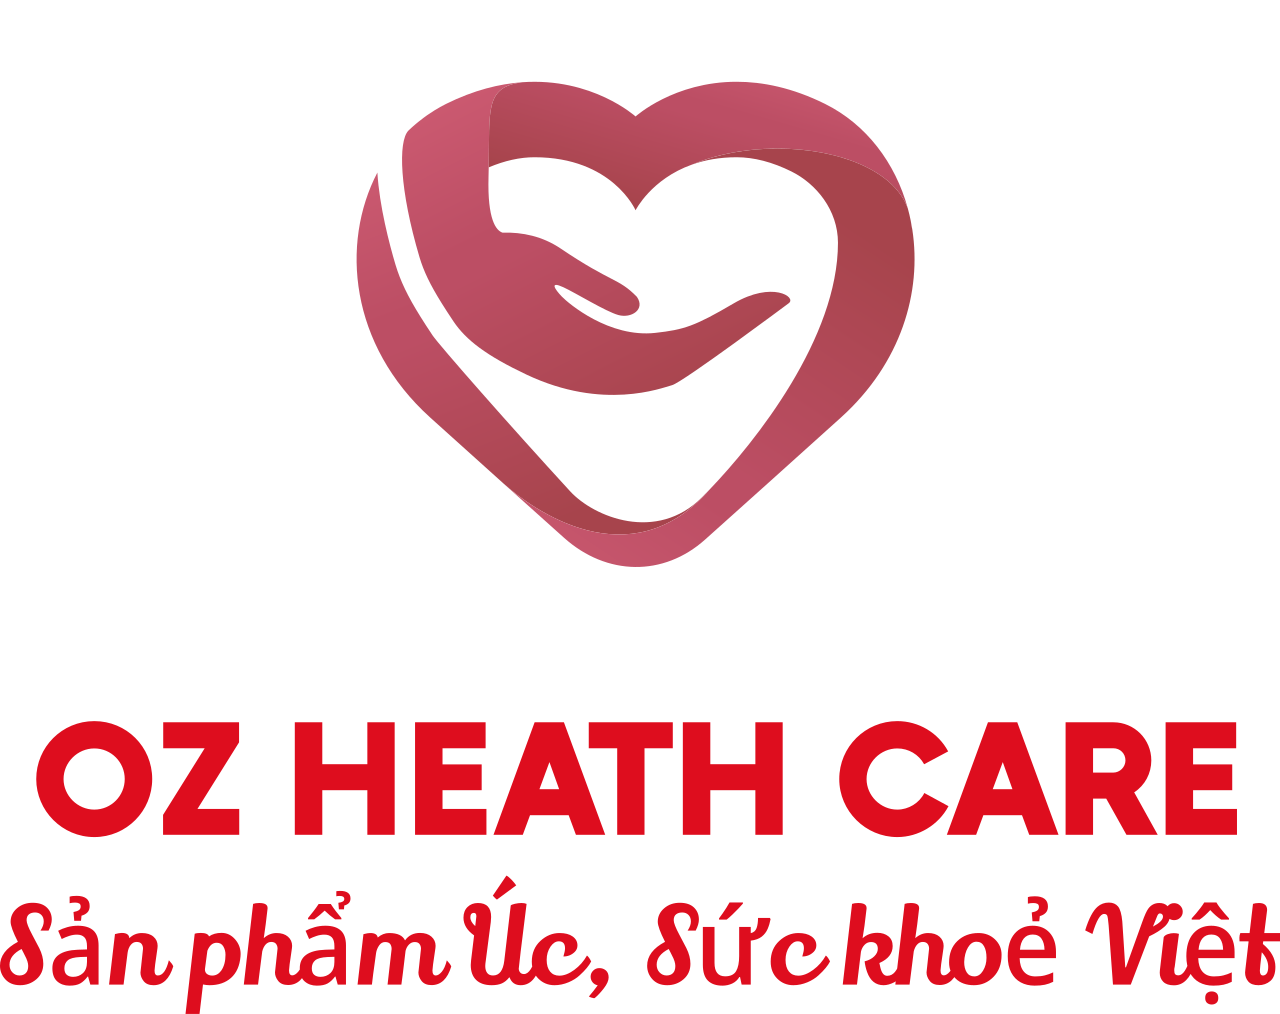 Oz Heath Care's web page